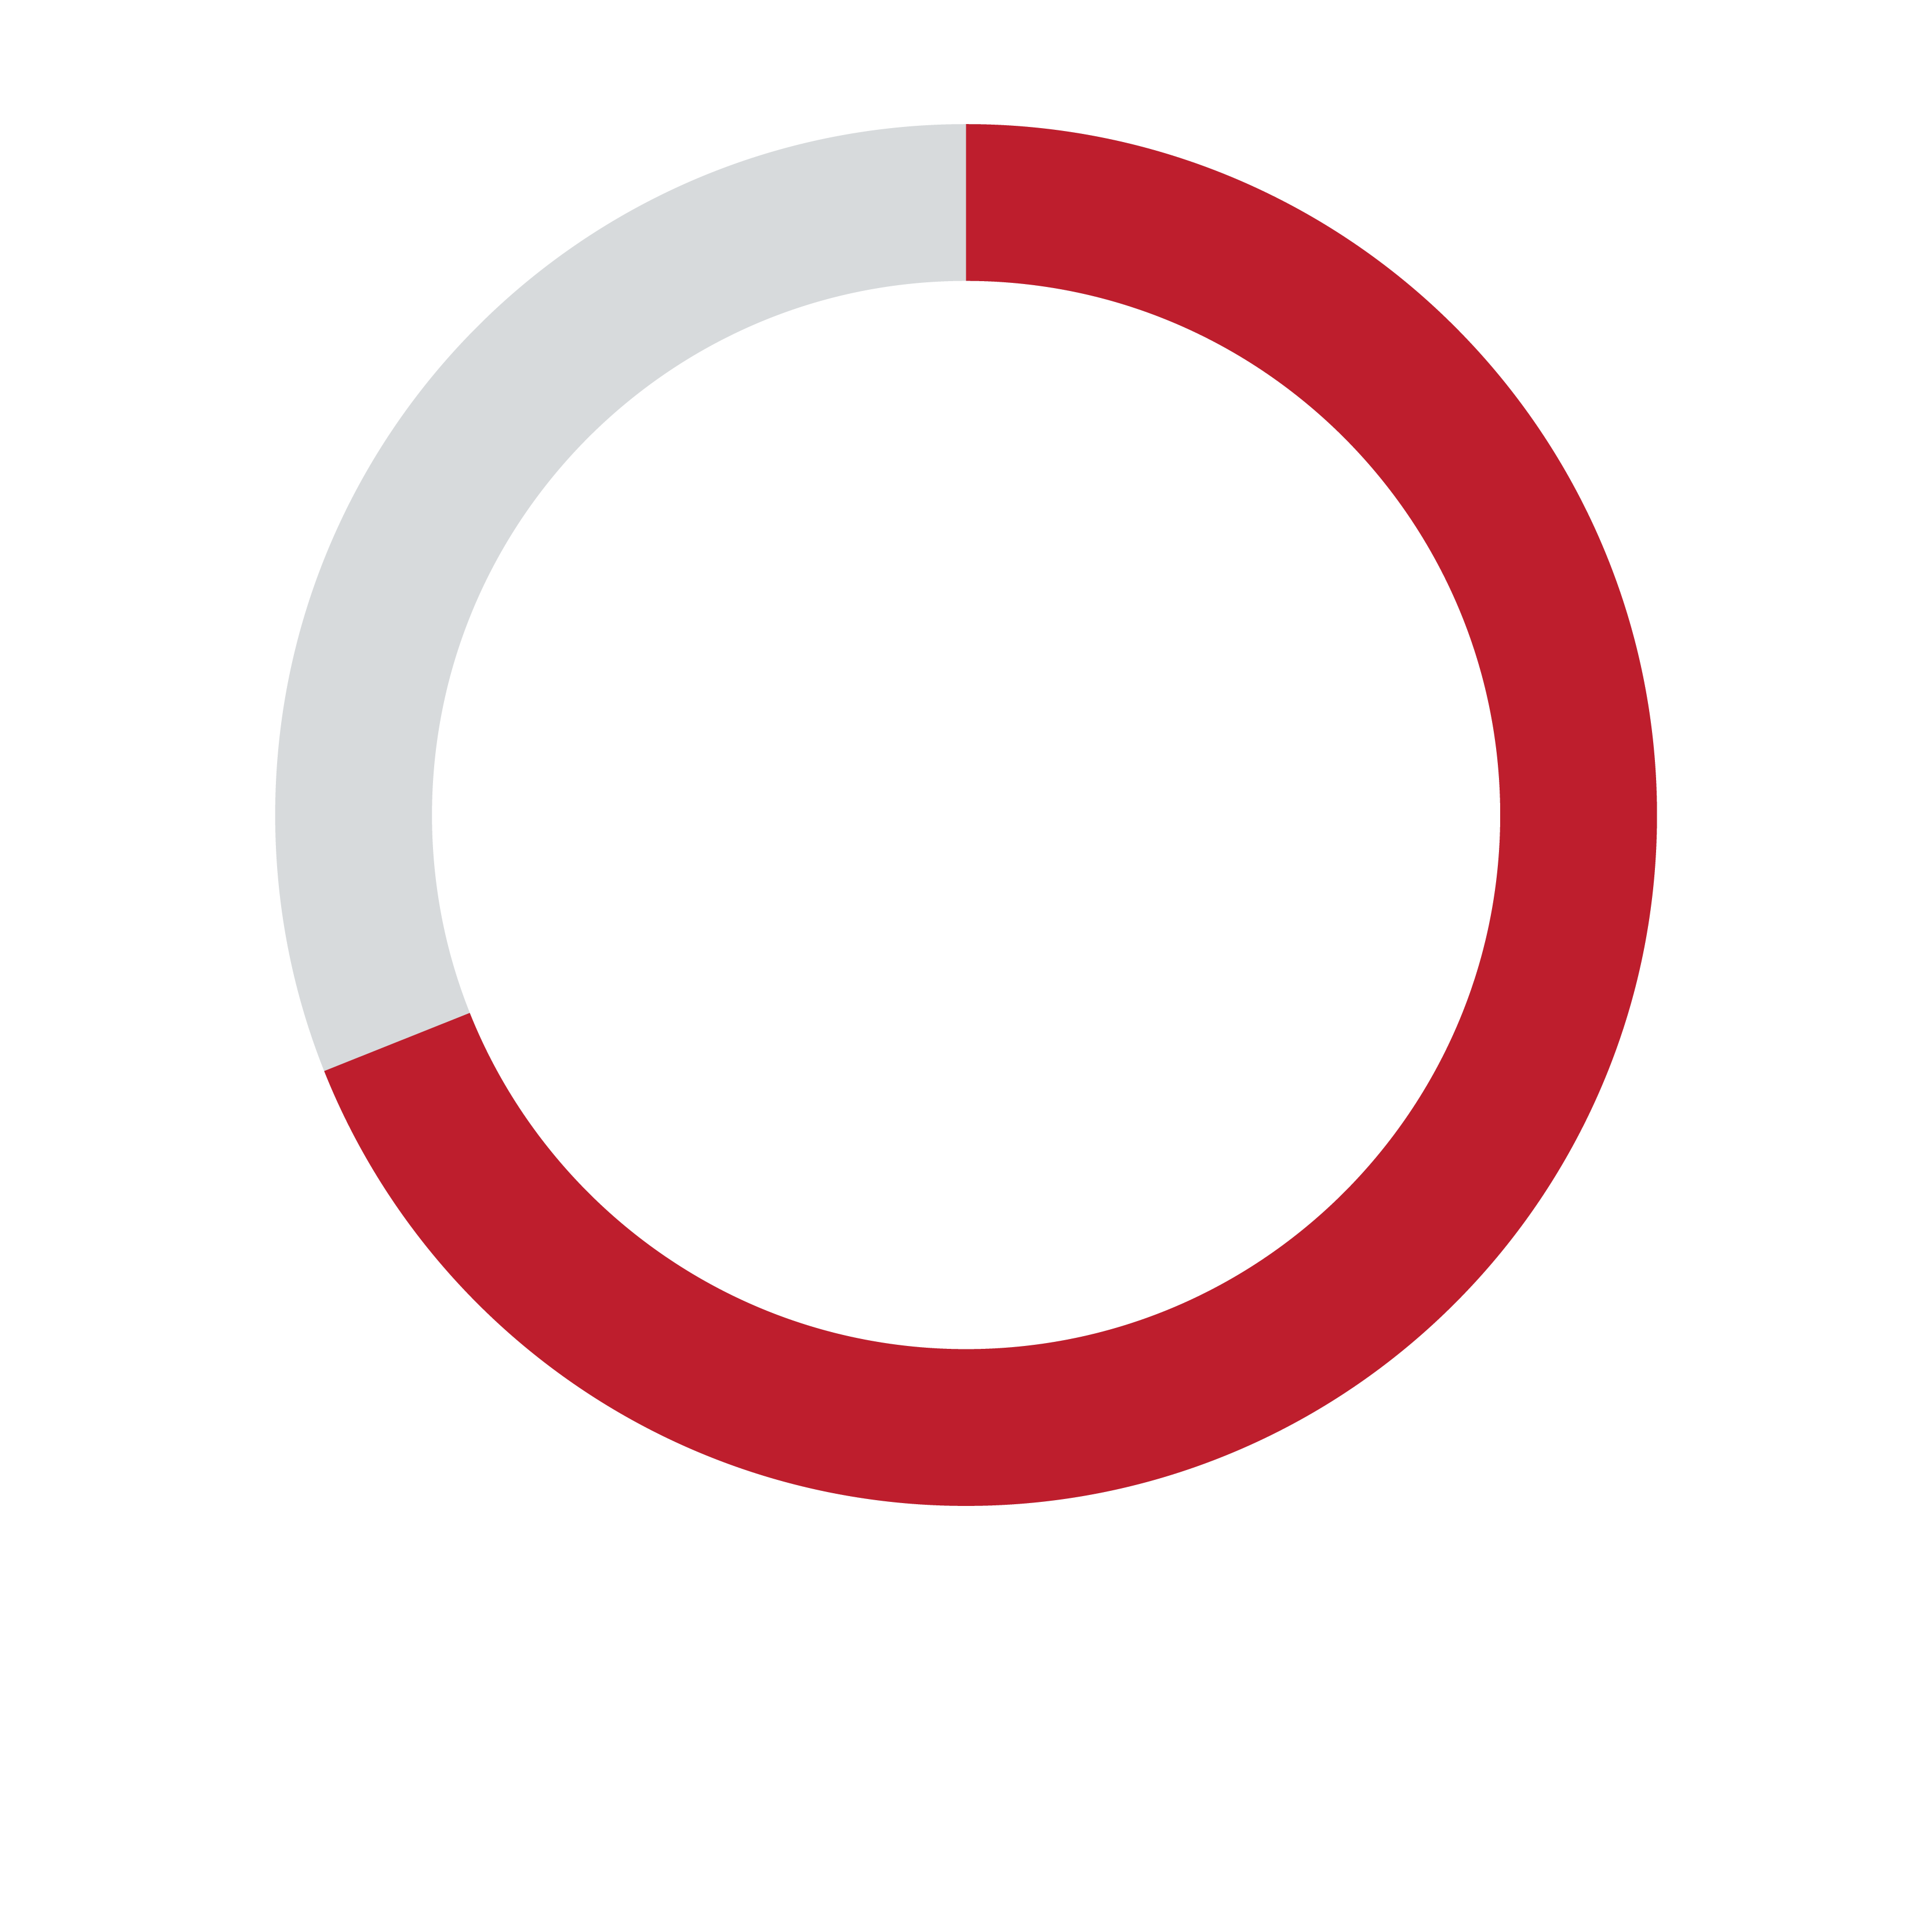 Programmatic revenue statistic